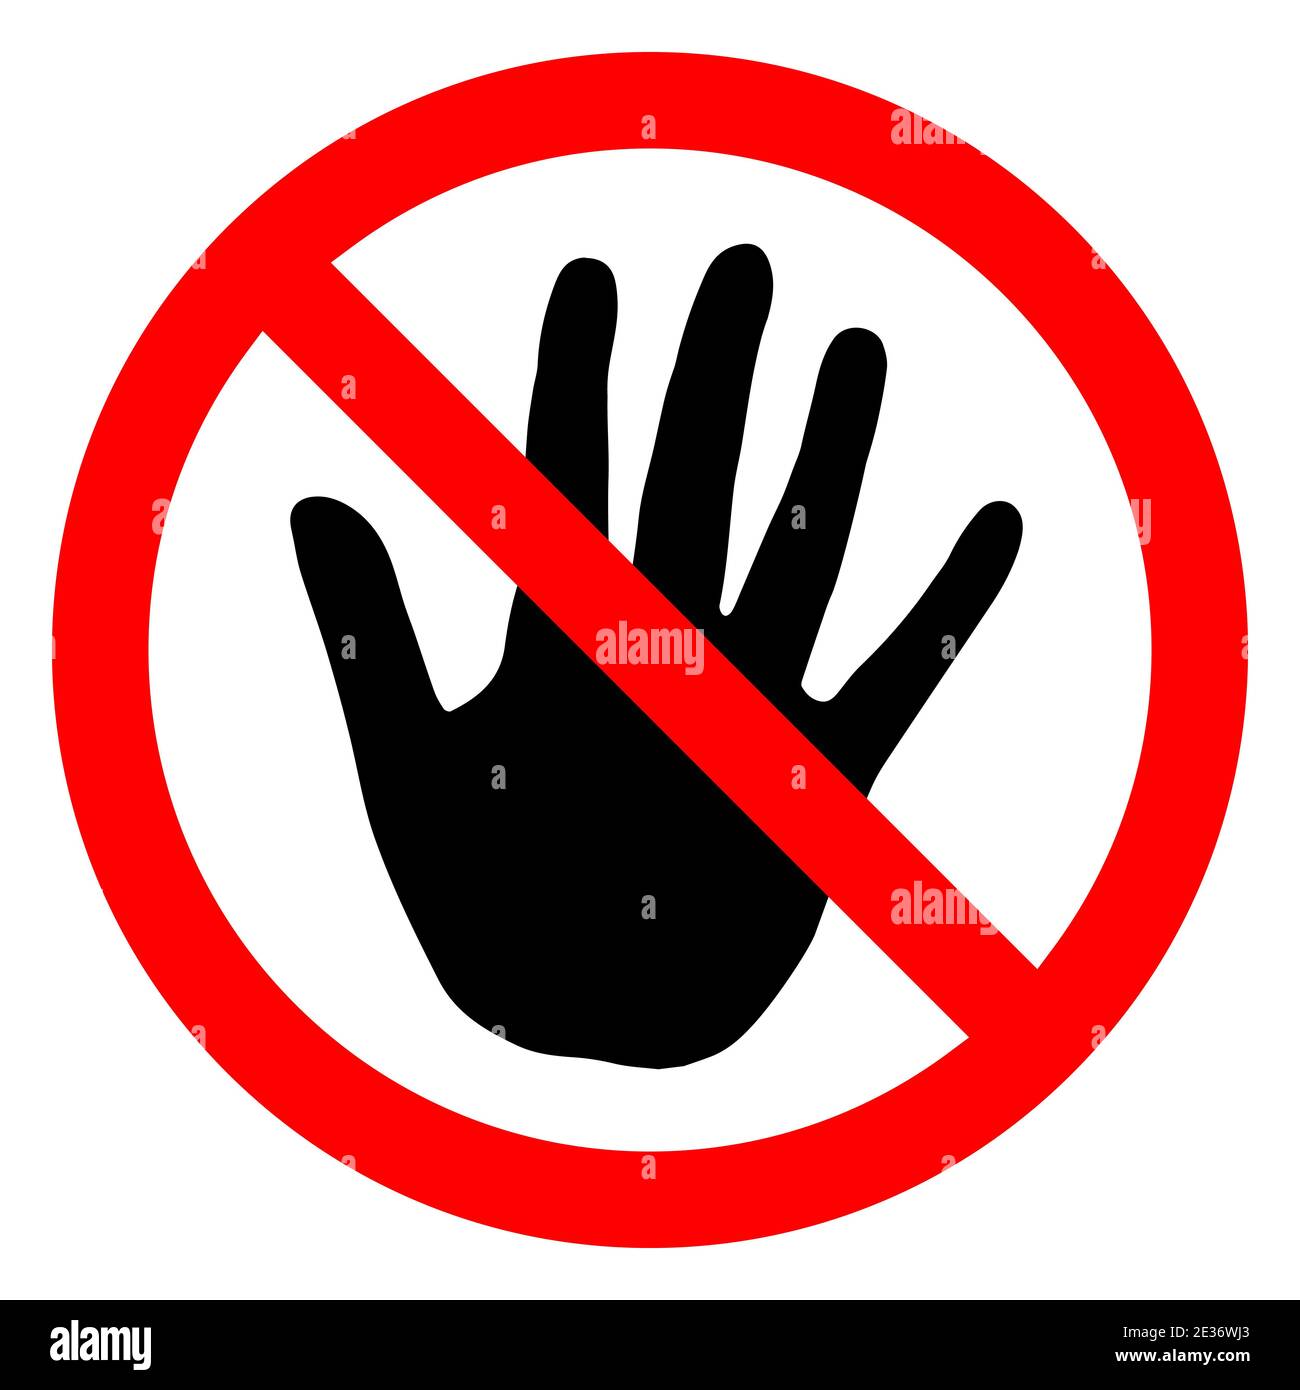 Включи стоп бана. Стоп бан. Рука запрещено. Знак руками не трогать. Знак с ладонью запрещающий.